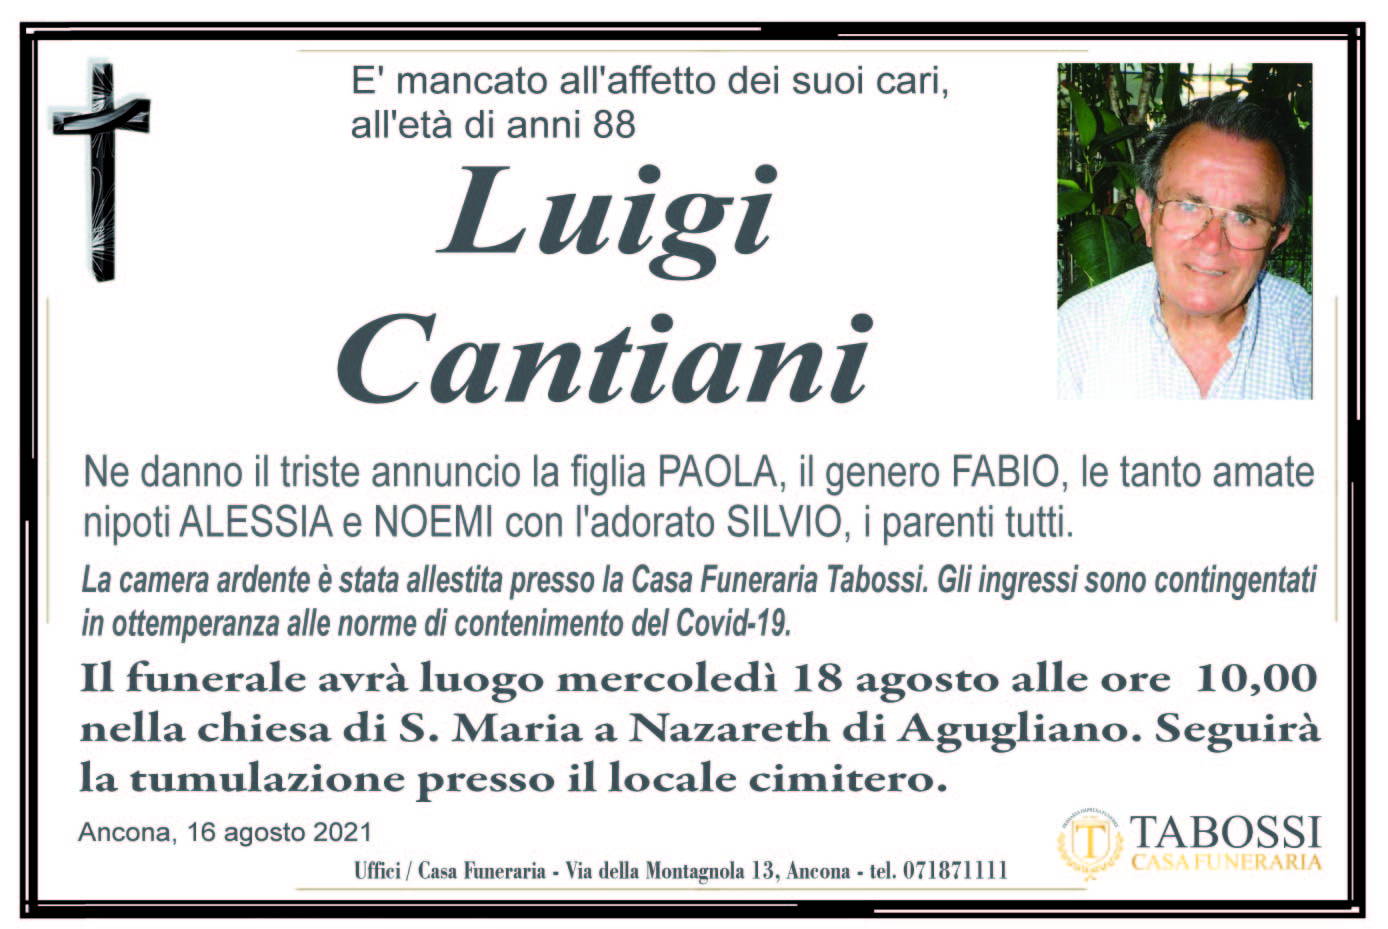 Luigi Cantiani